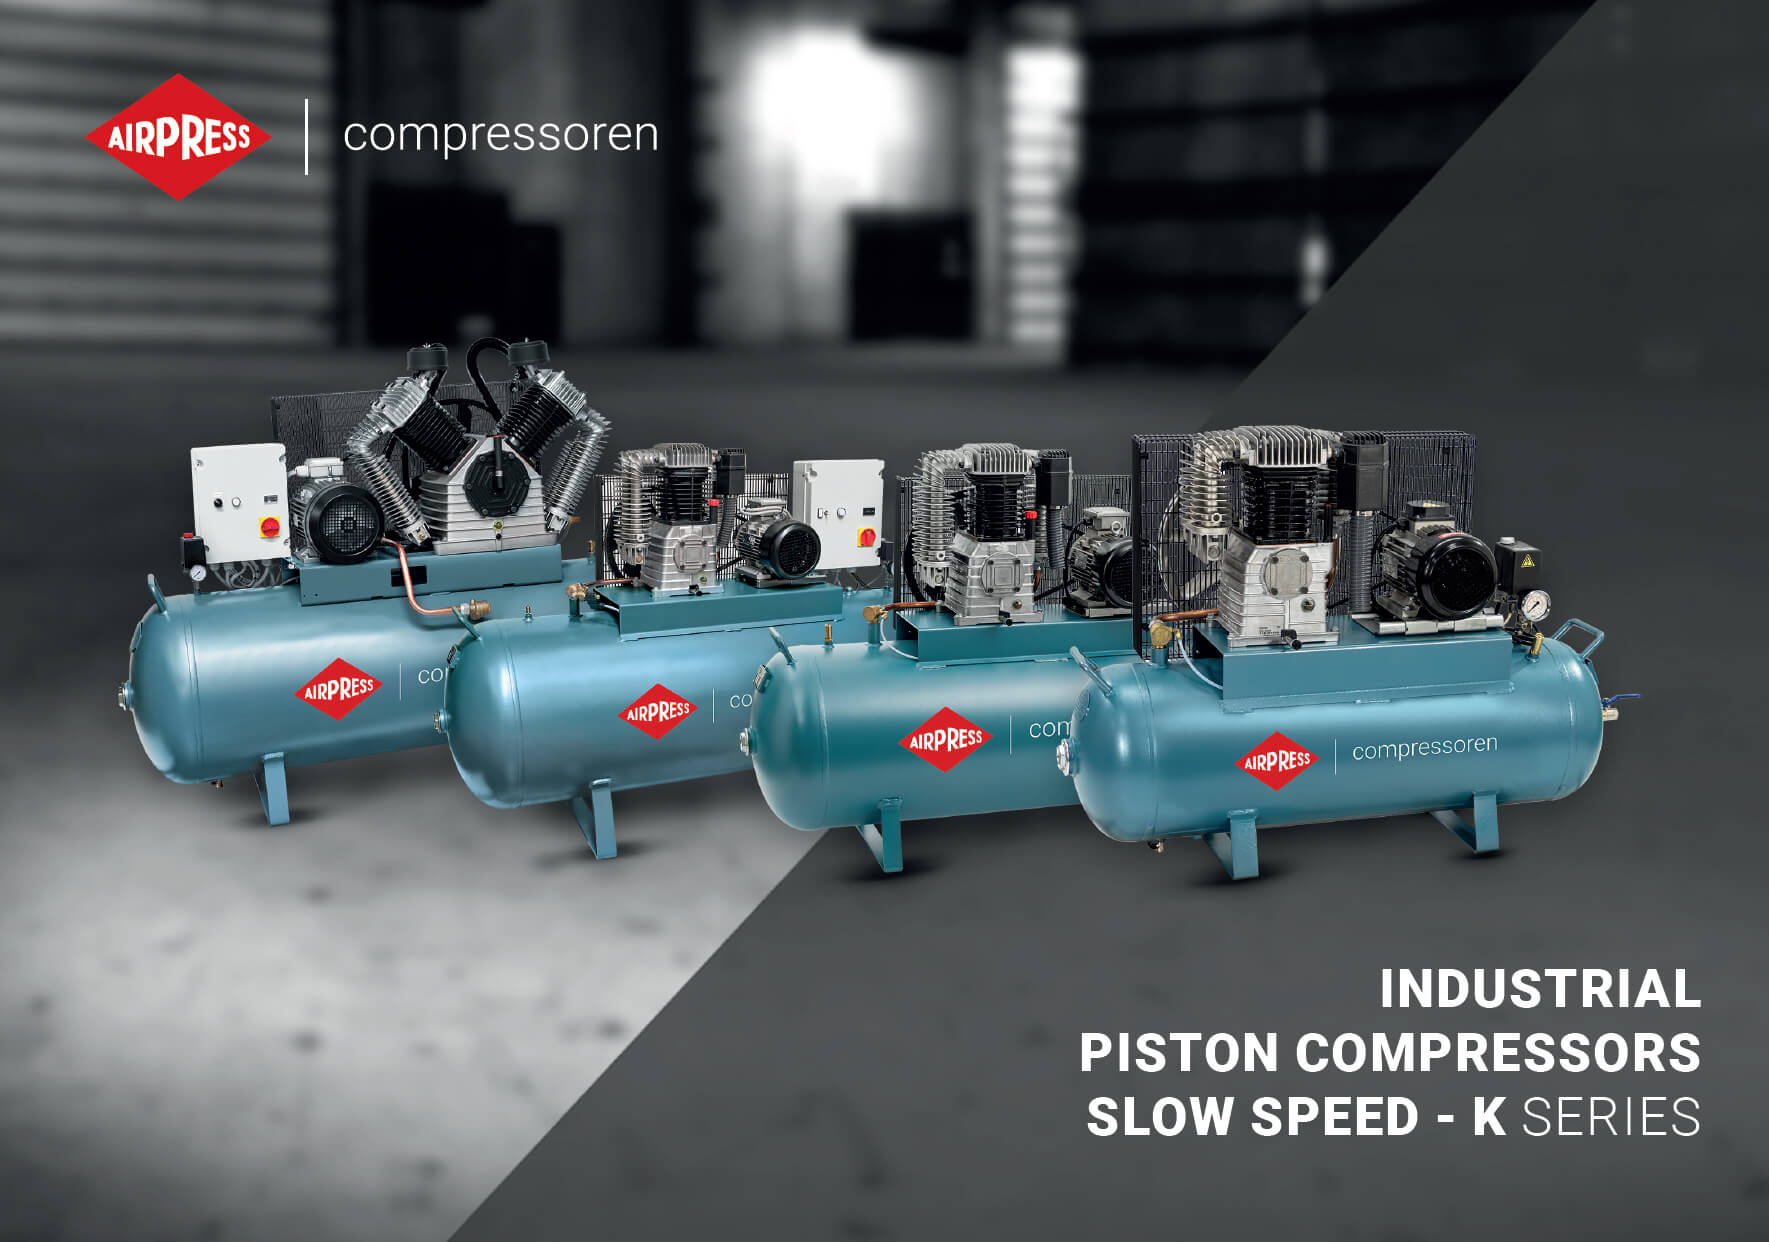 Piston Compressed K Serie